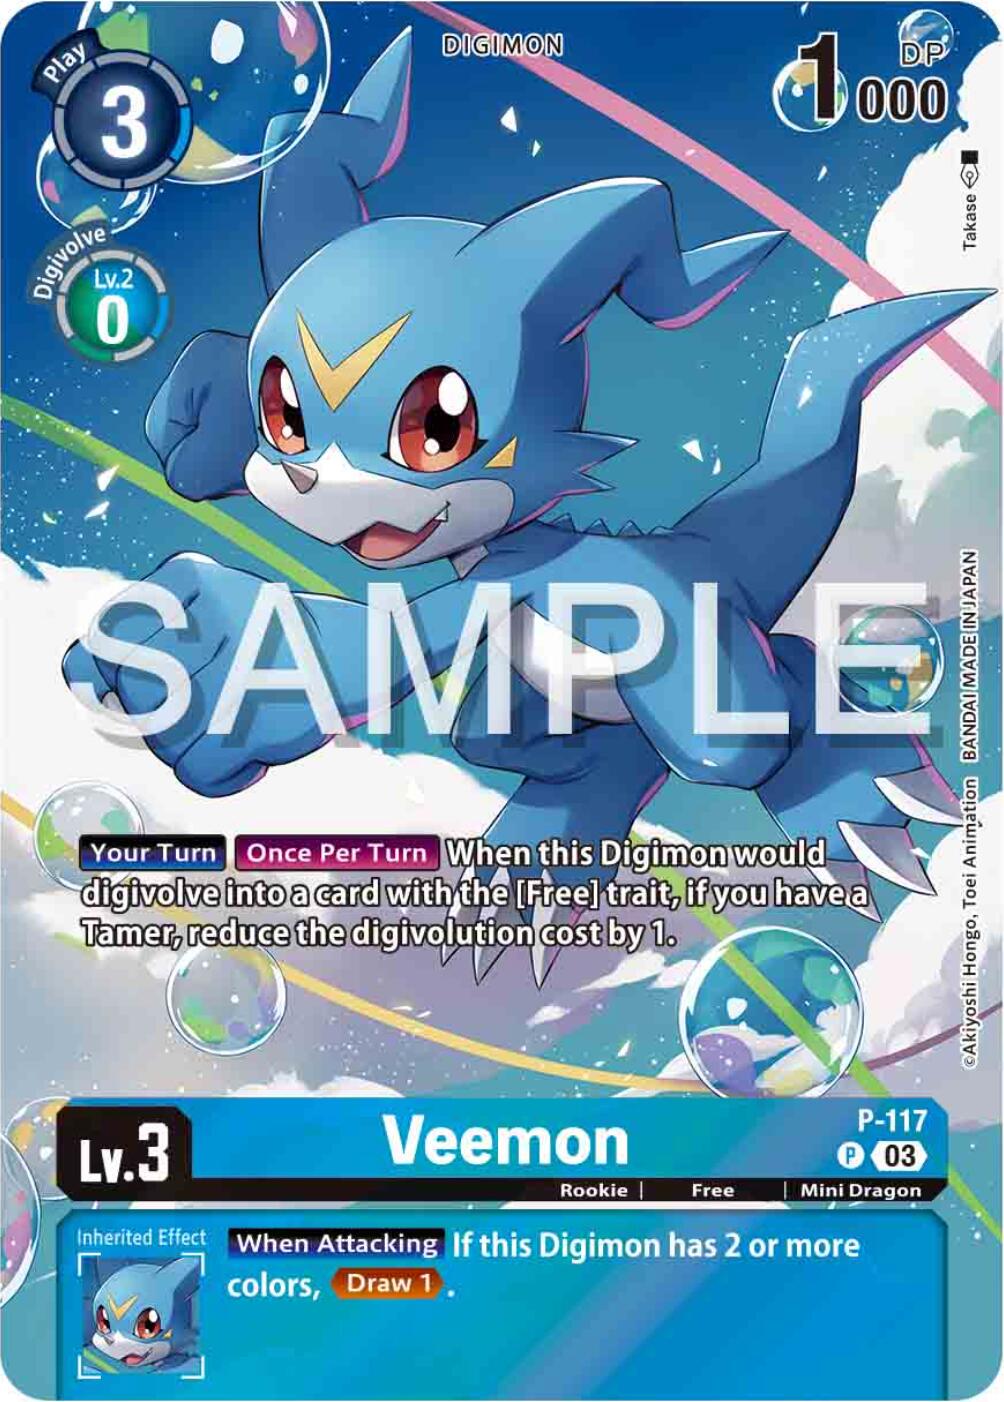 Veemon [P-117] (Digimon Adventure 02: The Beginning Set) [Promotional Cards]